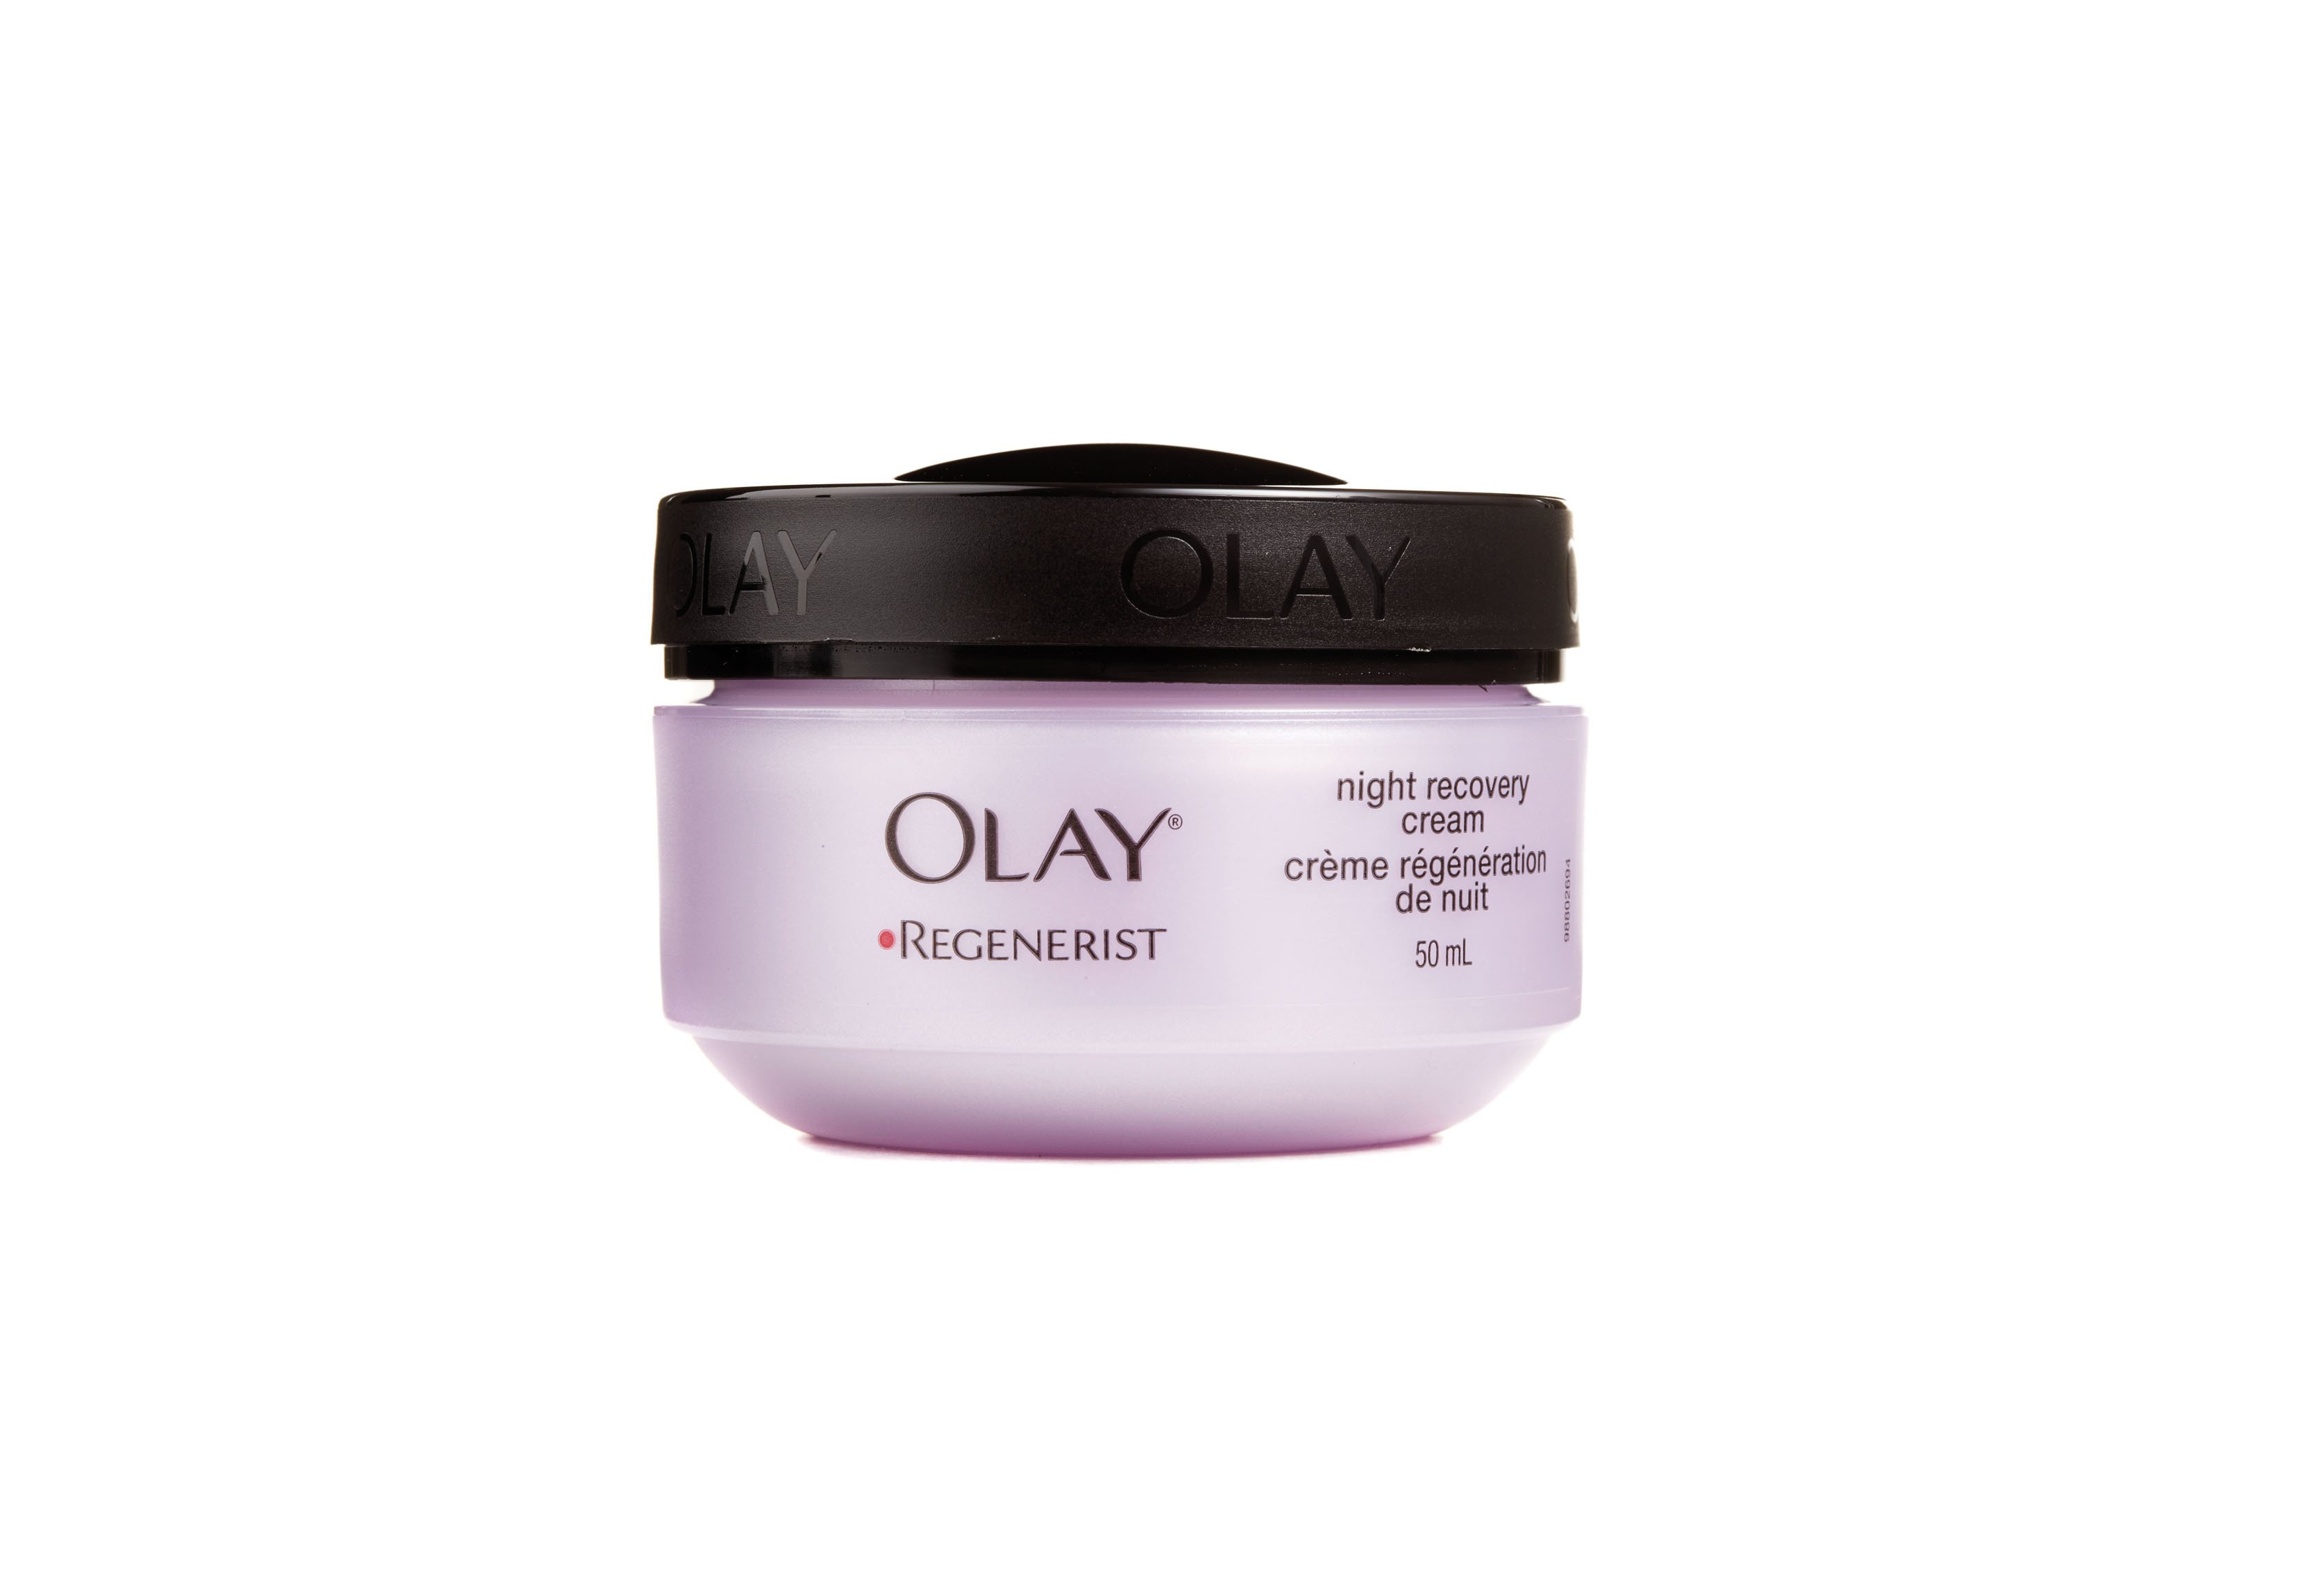 Olay Regenerist Night Recovery Cream